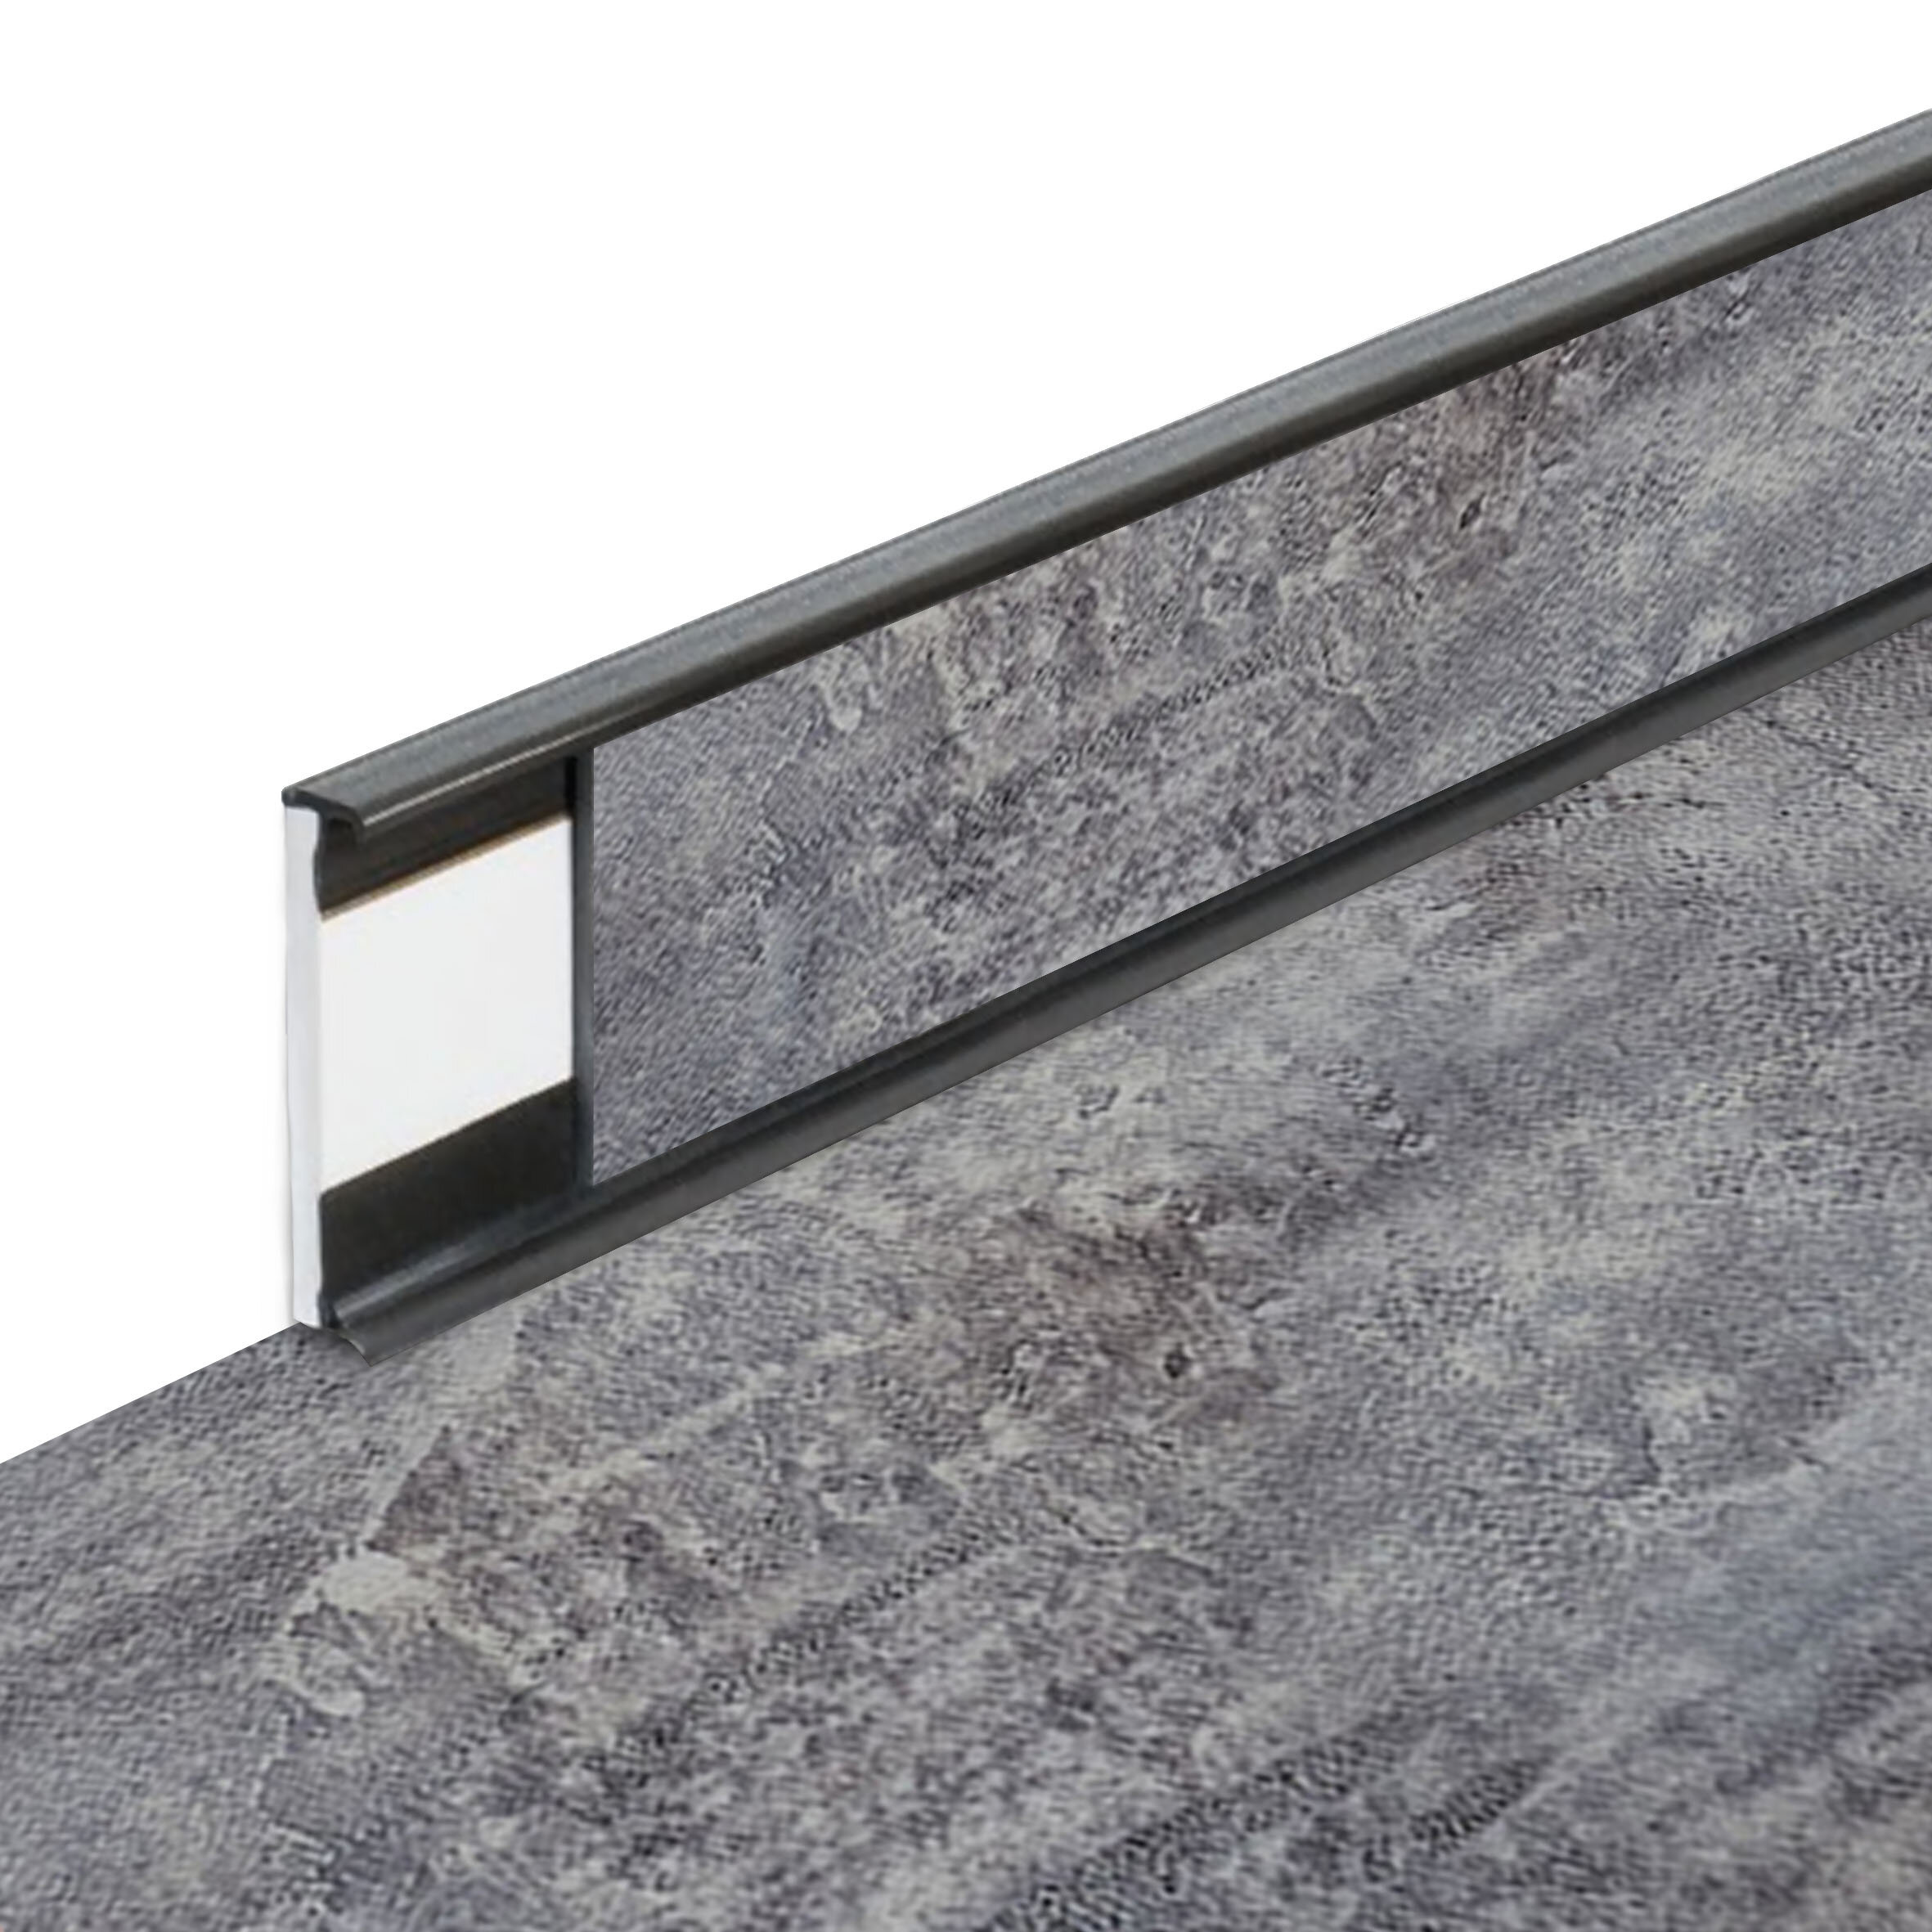 PVC vinylová soklová podlahová lišta Fortelock Business Forsen mountain peak C017 graphite - délka 200 cm, výška 5,8 cm, tloušťka 1,2 cm